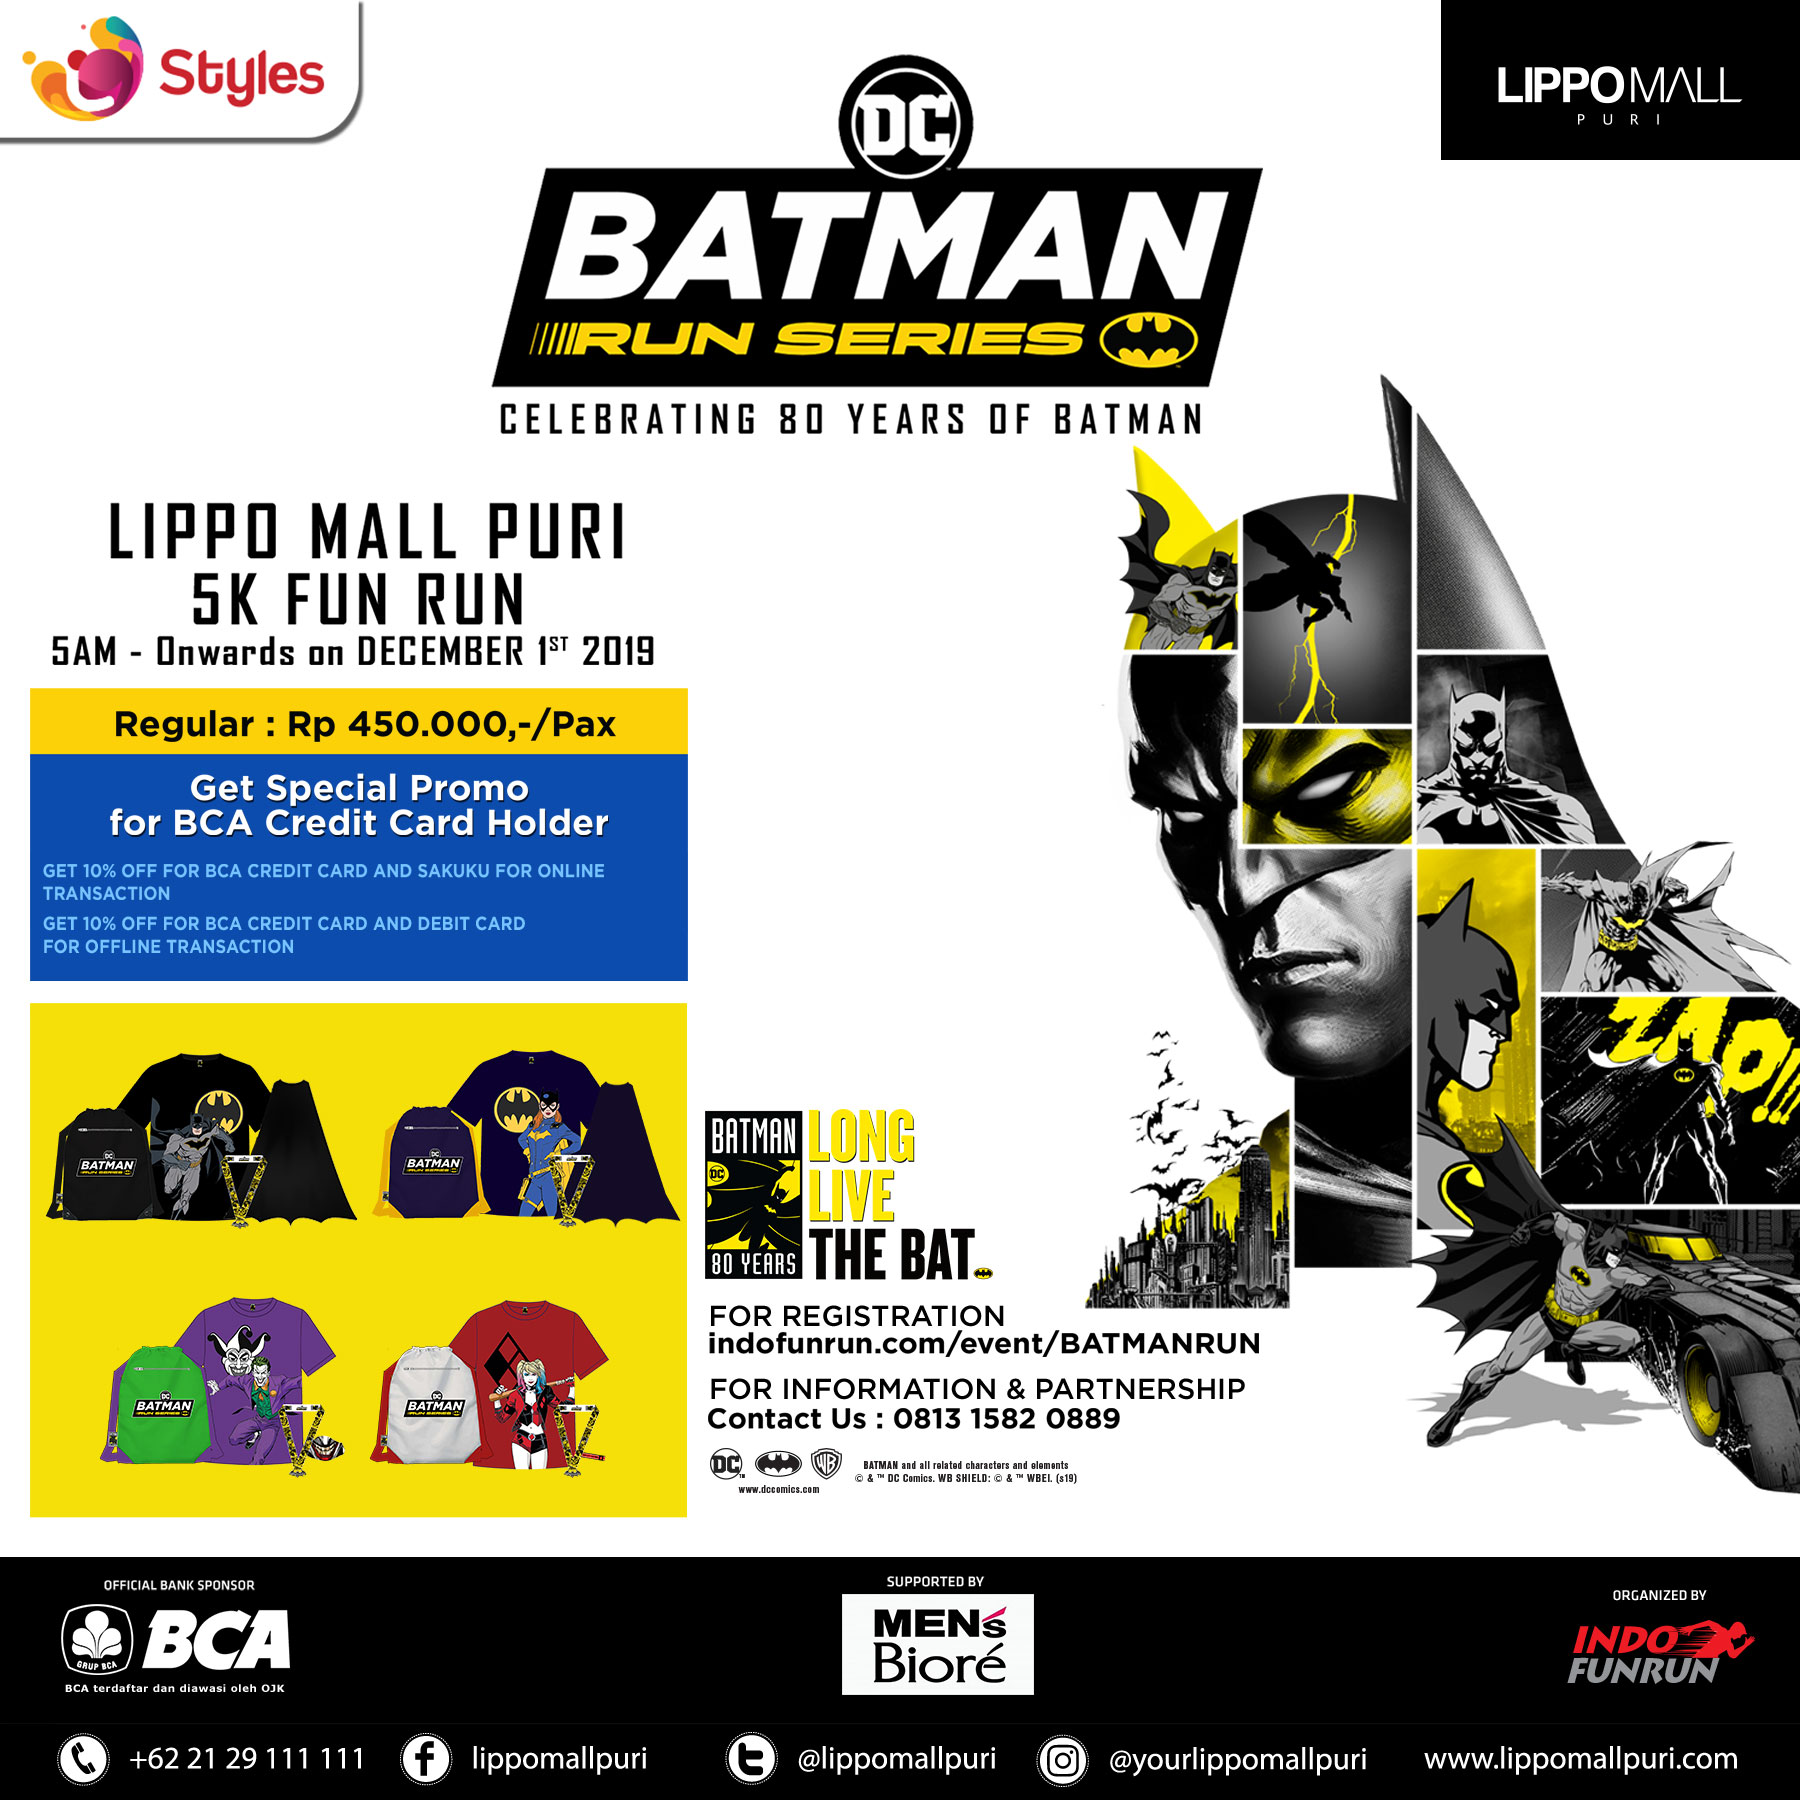 Batman Run Series promo in lippo mall puri st. moritz